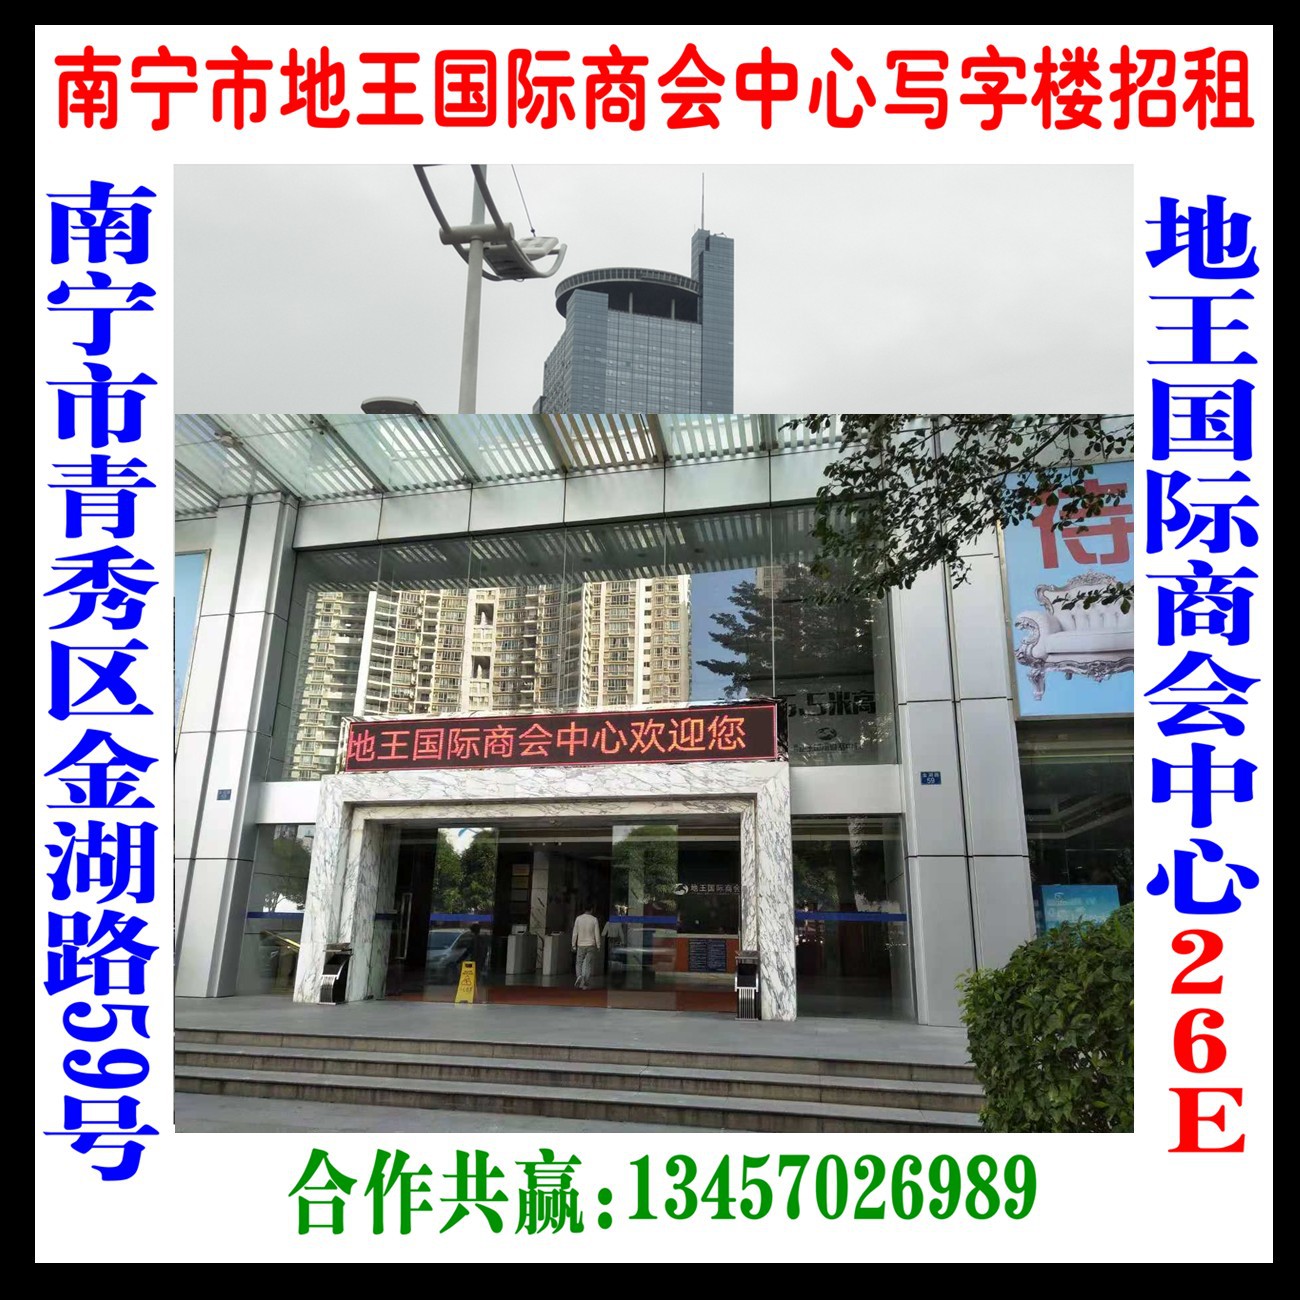 Office Office rental Nanning Qingxiu District Lake 59 Wang International Chamber of Commerce core